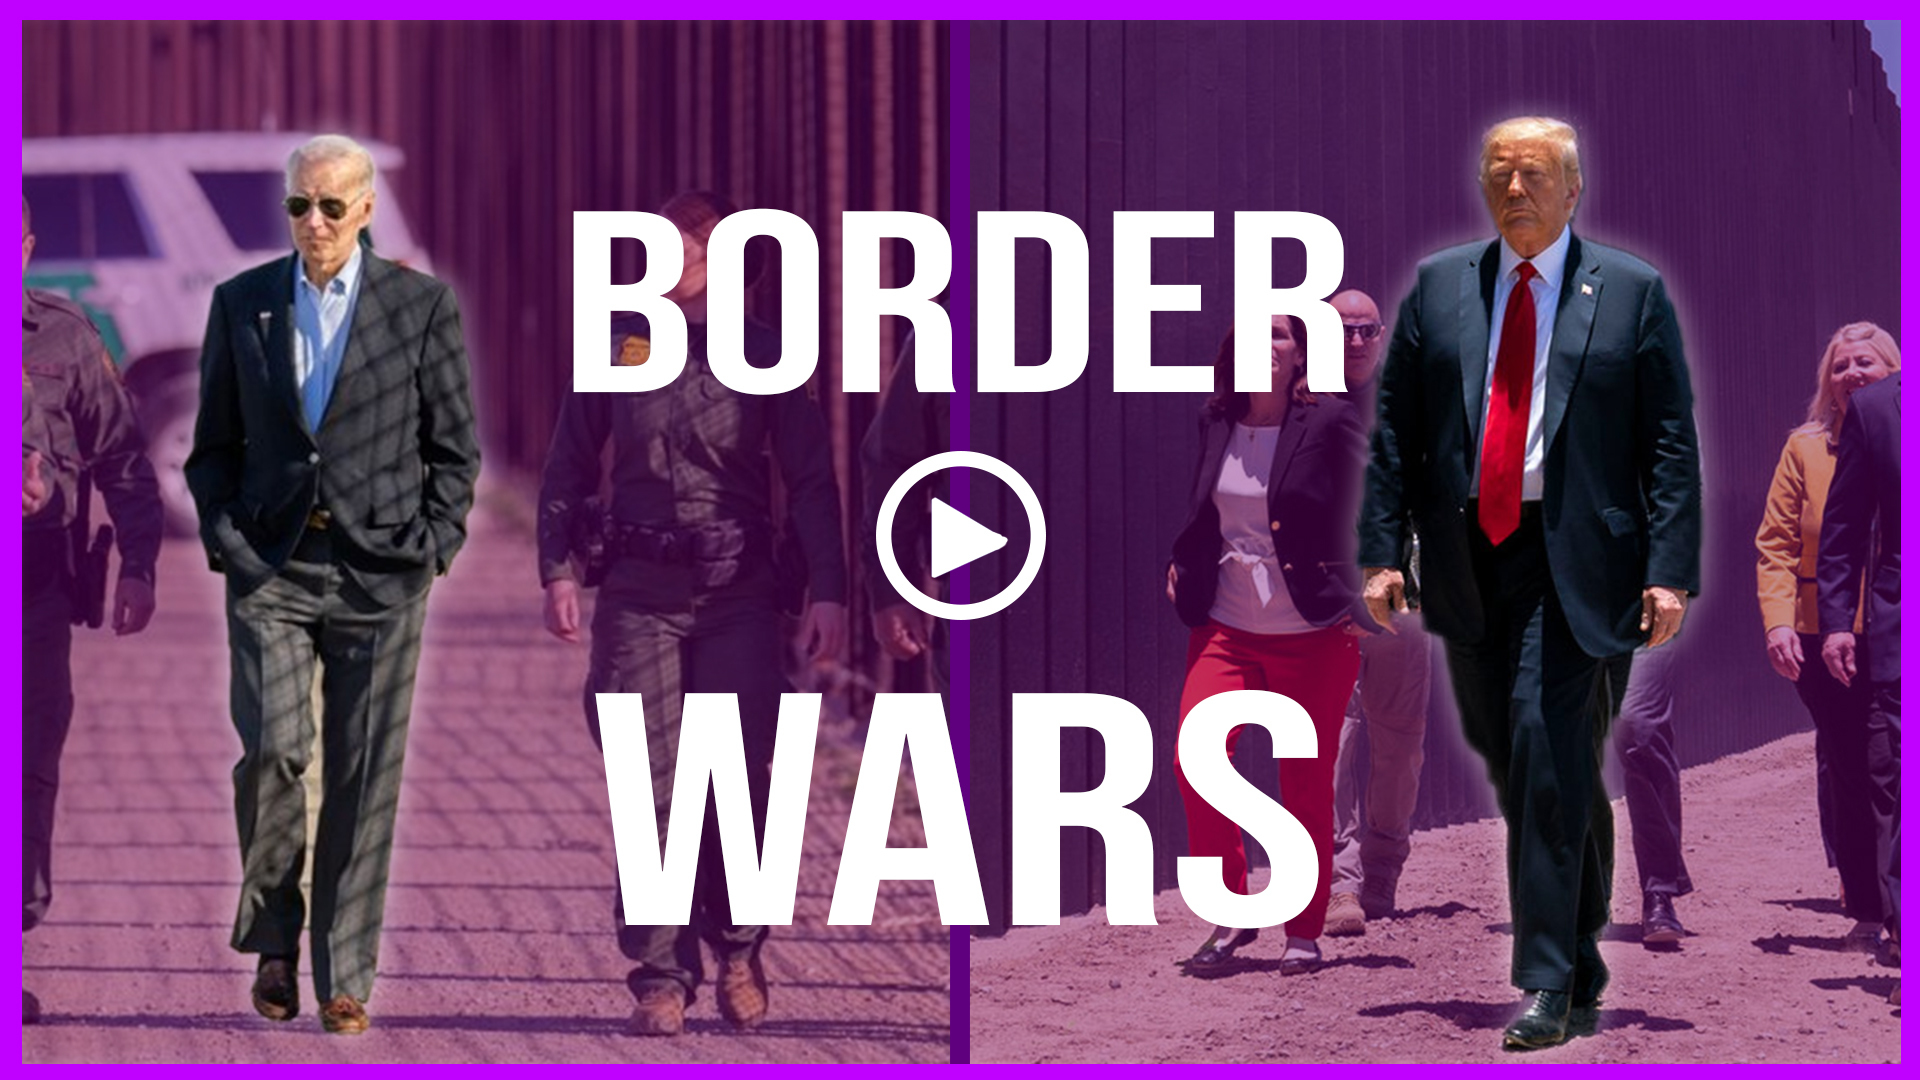 Border Wars #politics #border #news